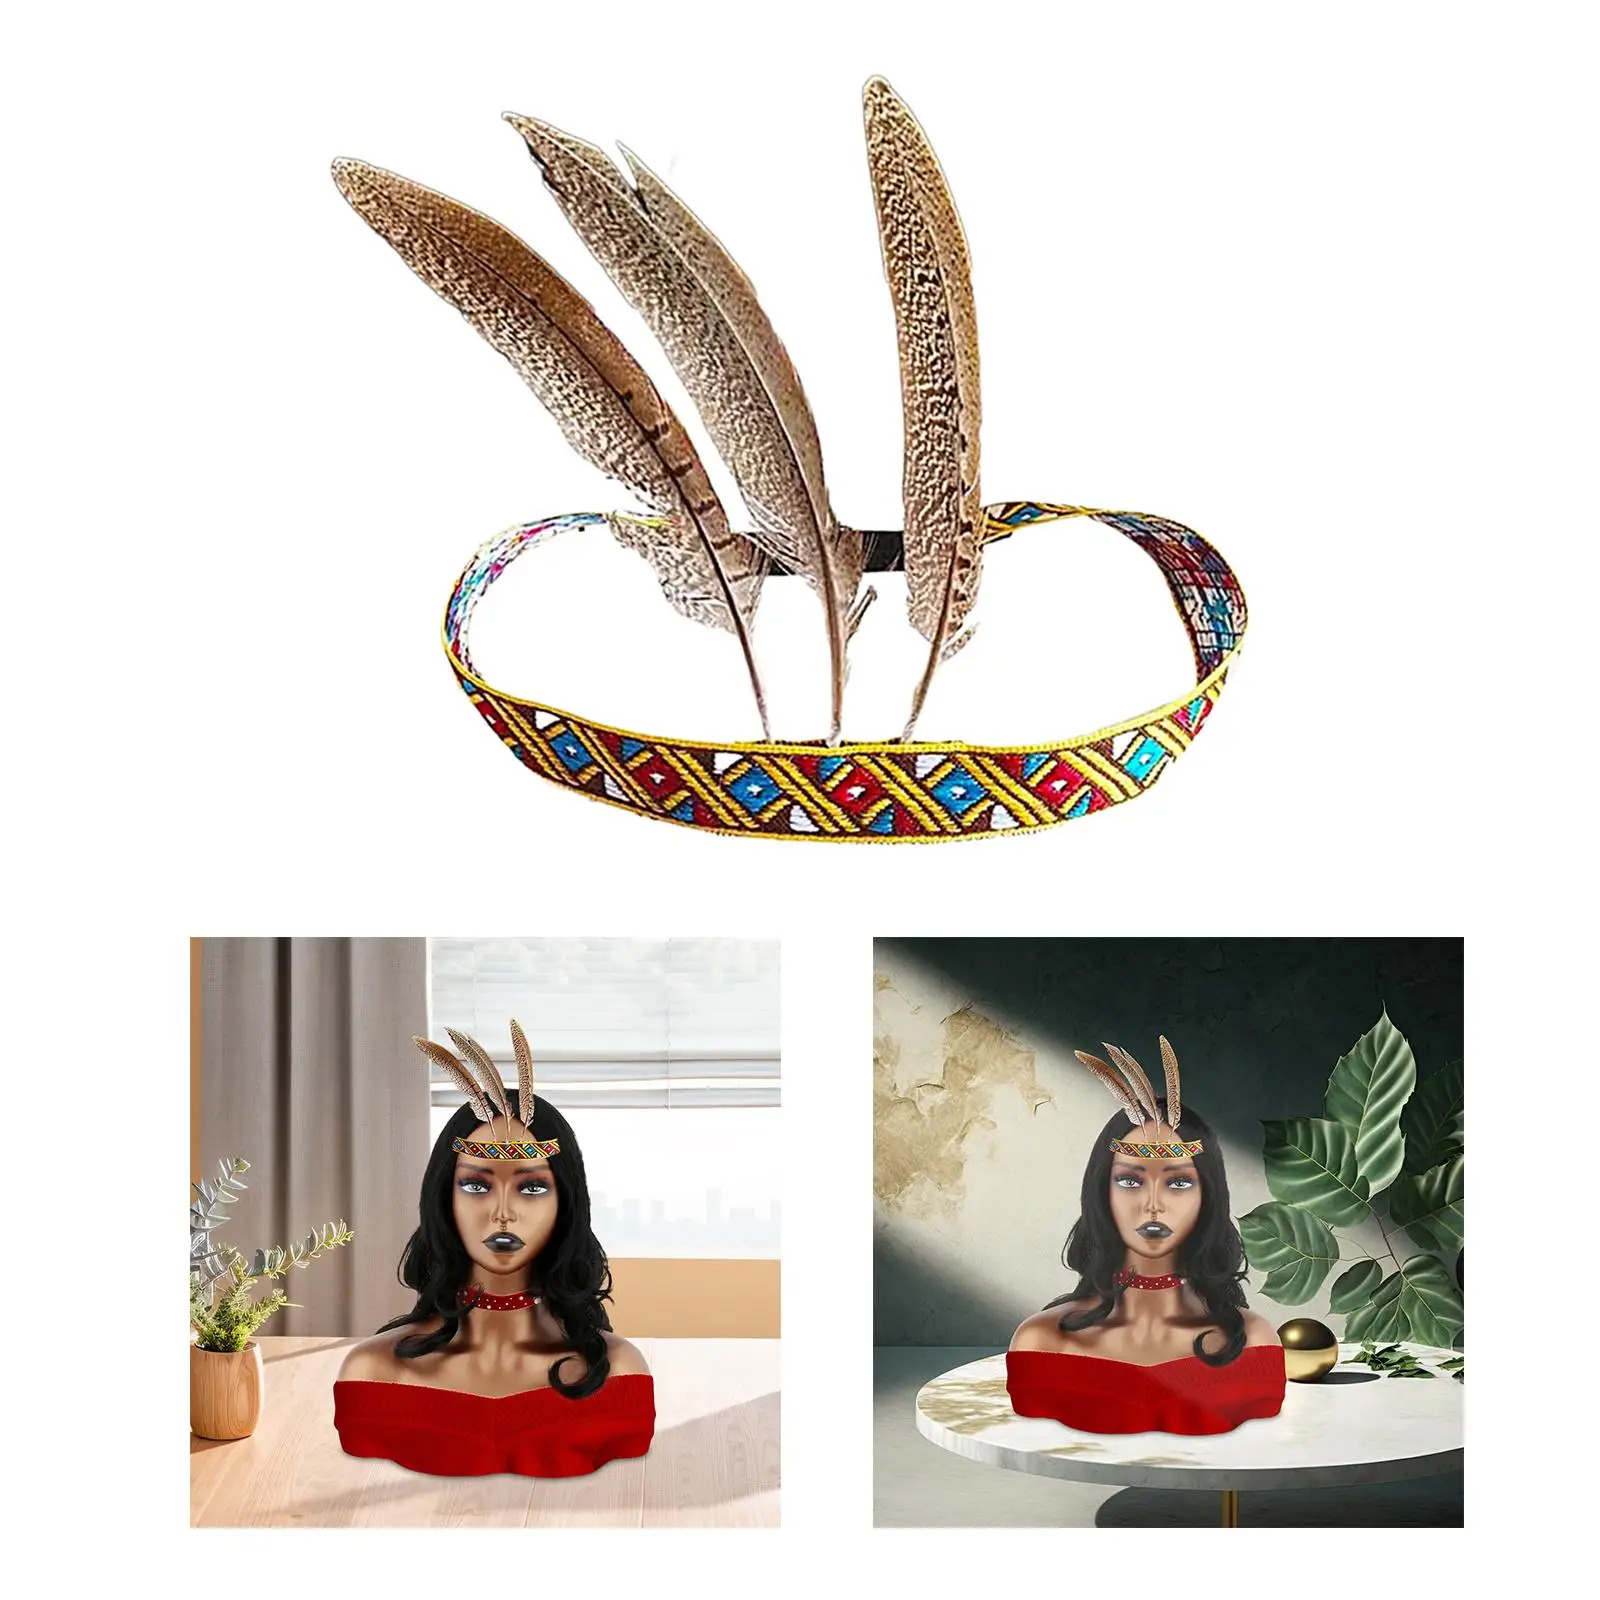 

Feather Headdress Chief Indian Headdress Costume Accessories Fashion Headpiece Headband Headwear for Party Cosplay Mardi Gras